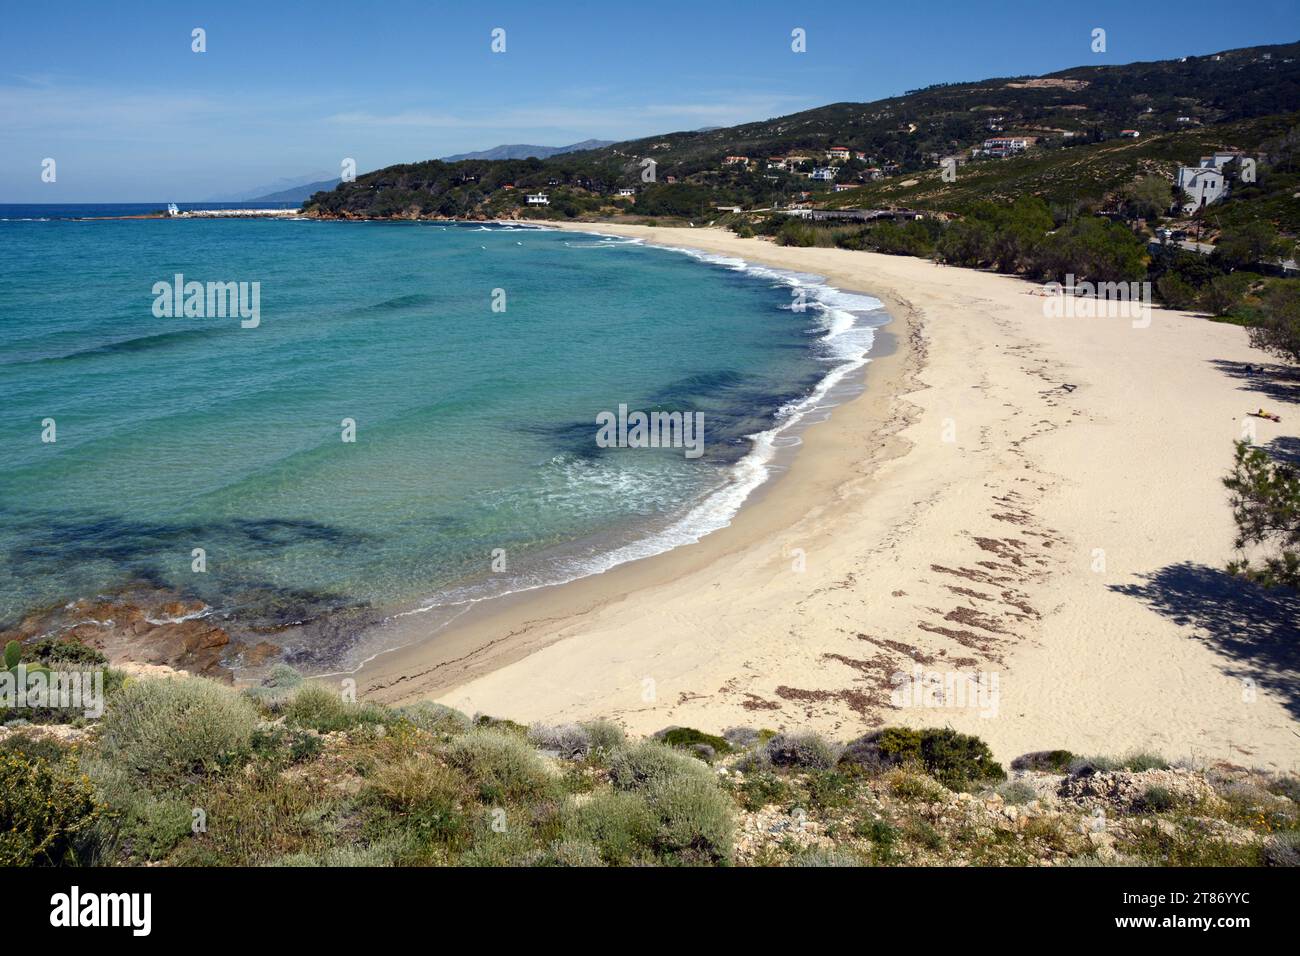 A sandy beach between Armenistis and Gialiskari on the north coast of the Greek island of Ikaria, a 'blue zone' in the Aegean Sea, in Greece. Stock Photo